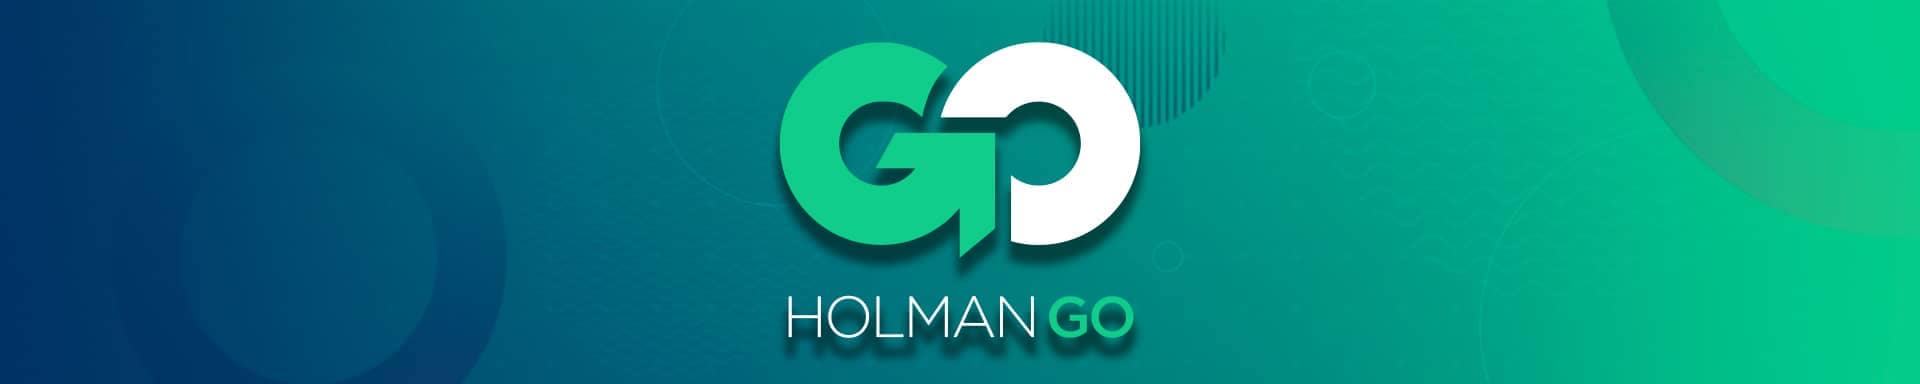 Holman Go